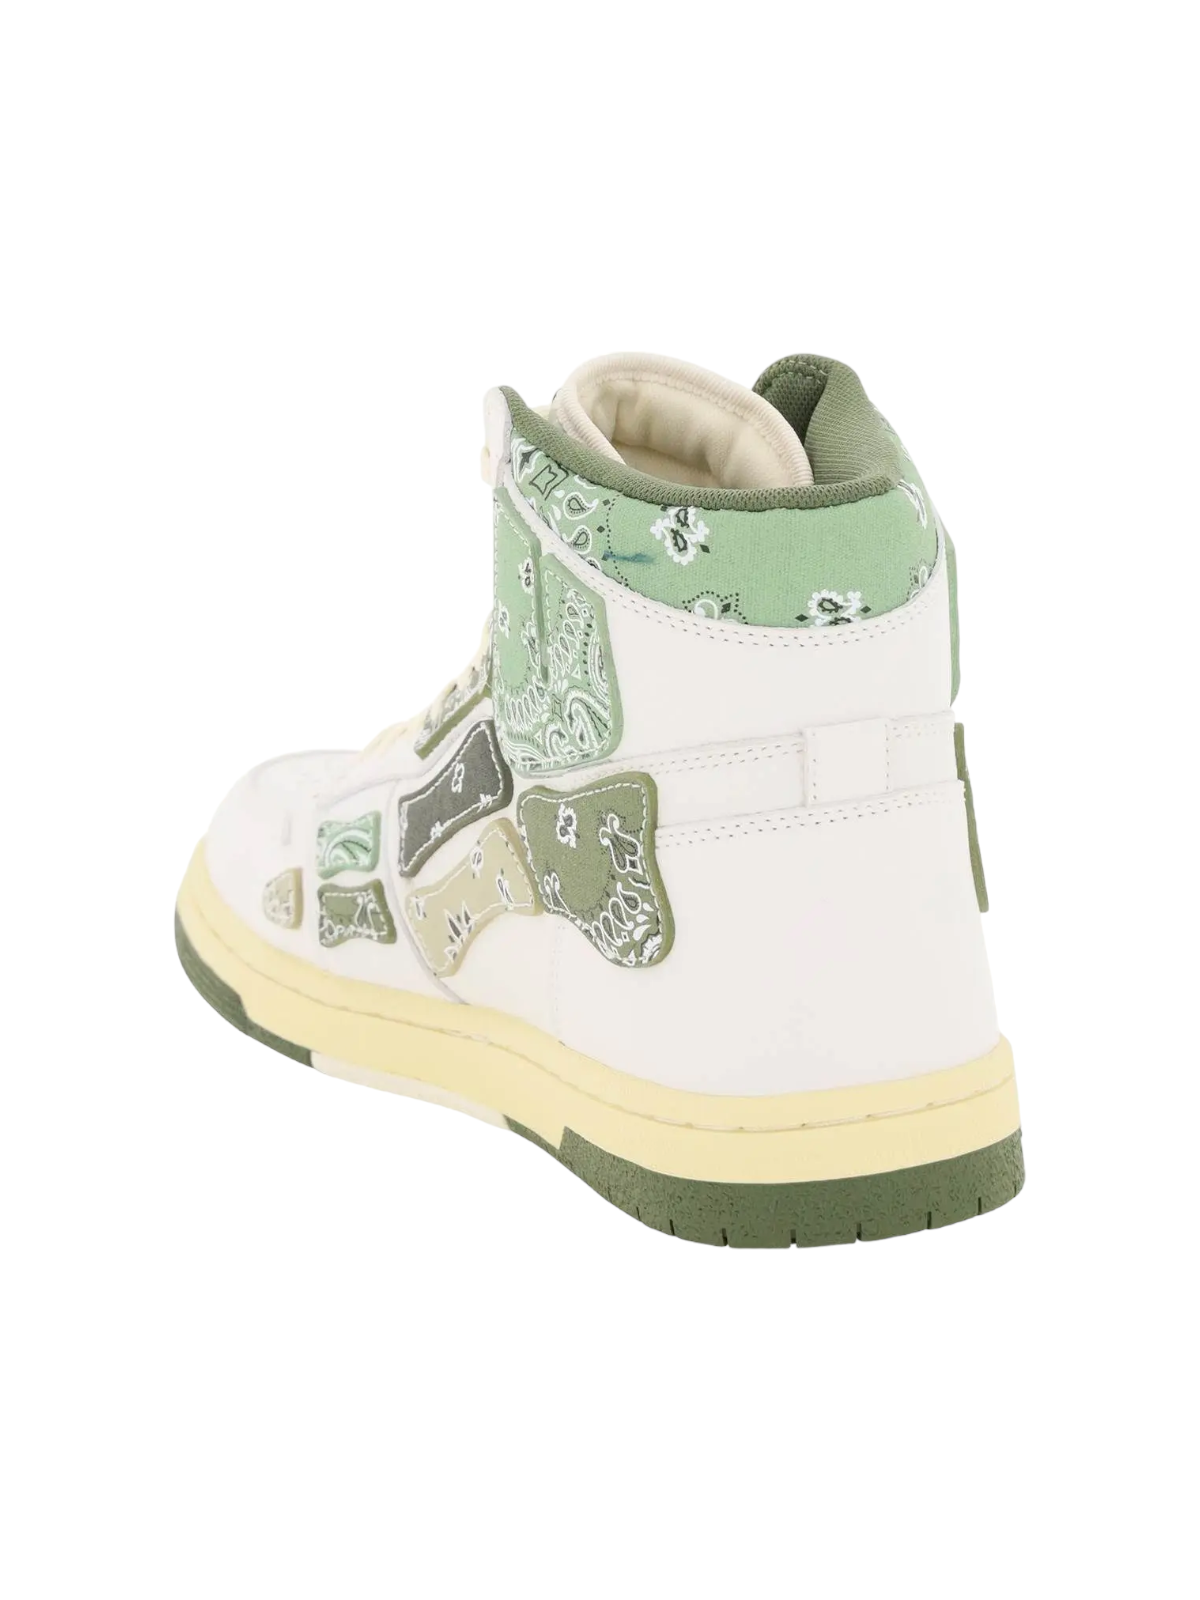 Amiri Skeleton High-Top Sneakers White/Green